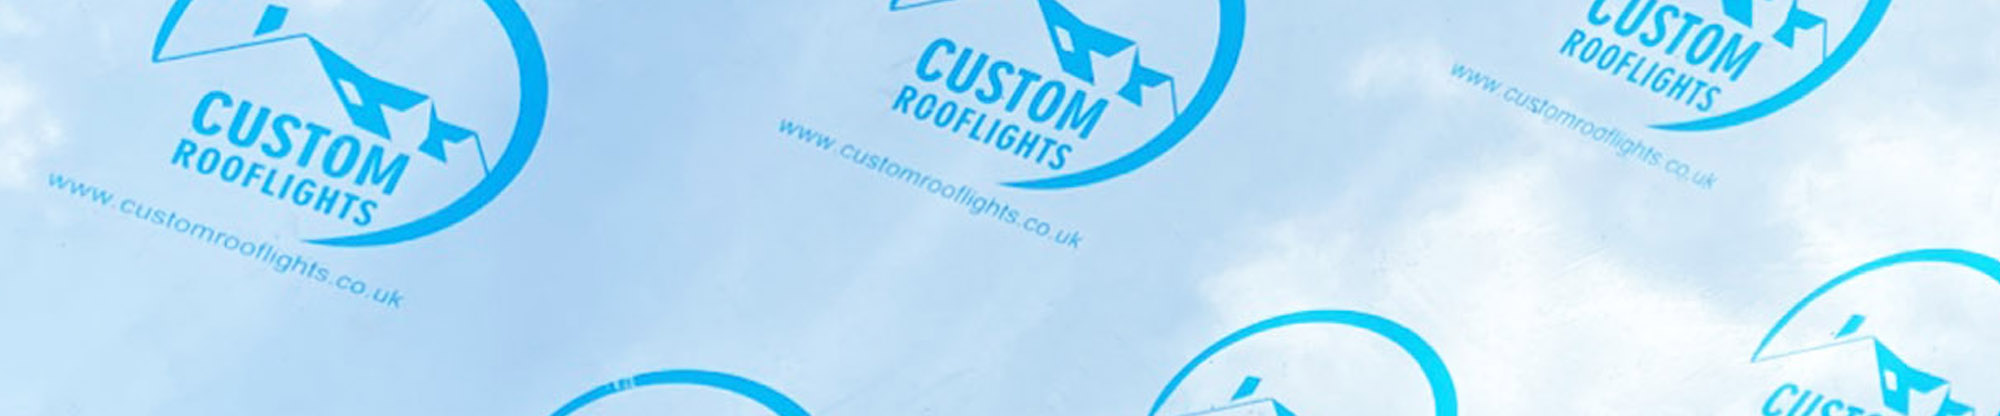 Custom Rooflights: Flat Round Rooflights / Skylights Products